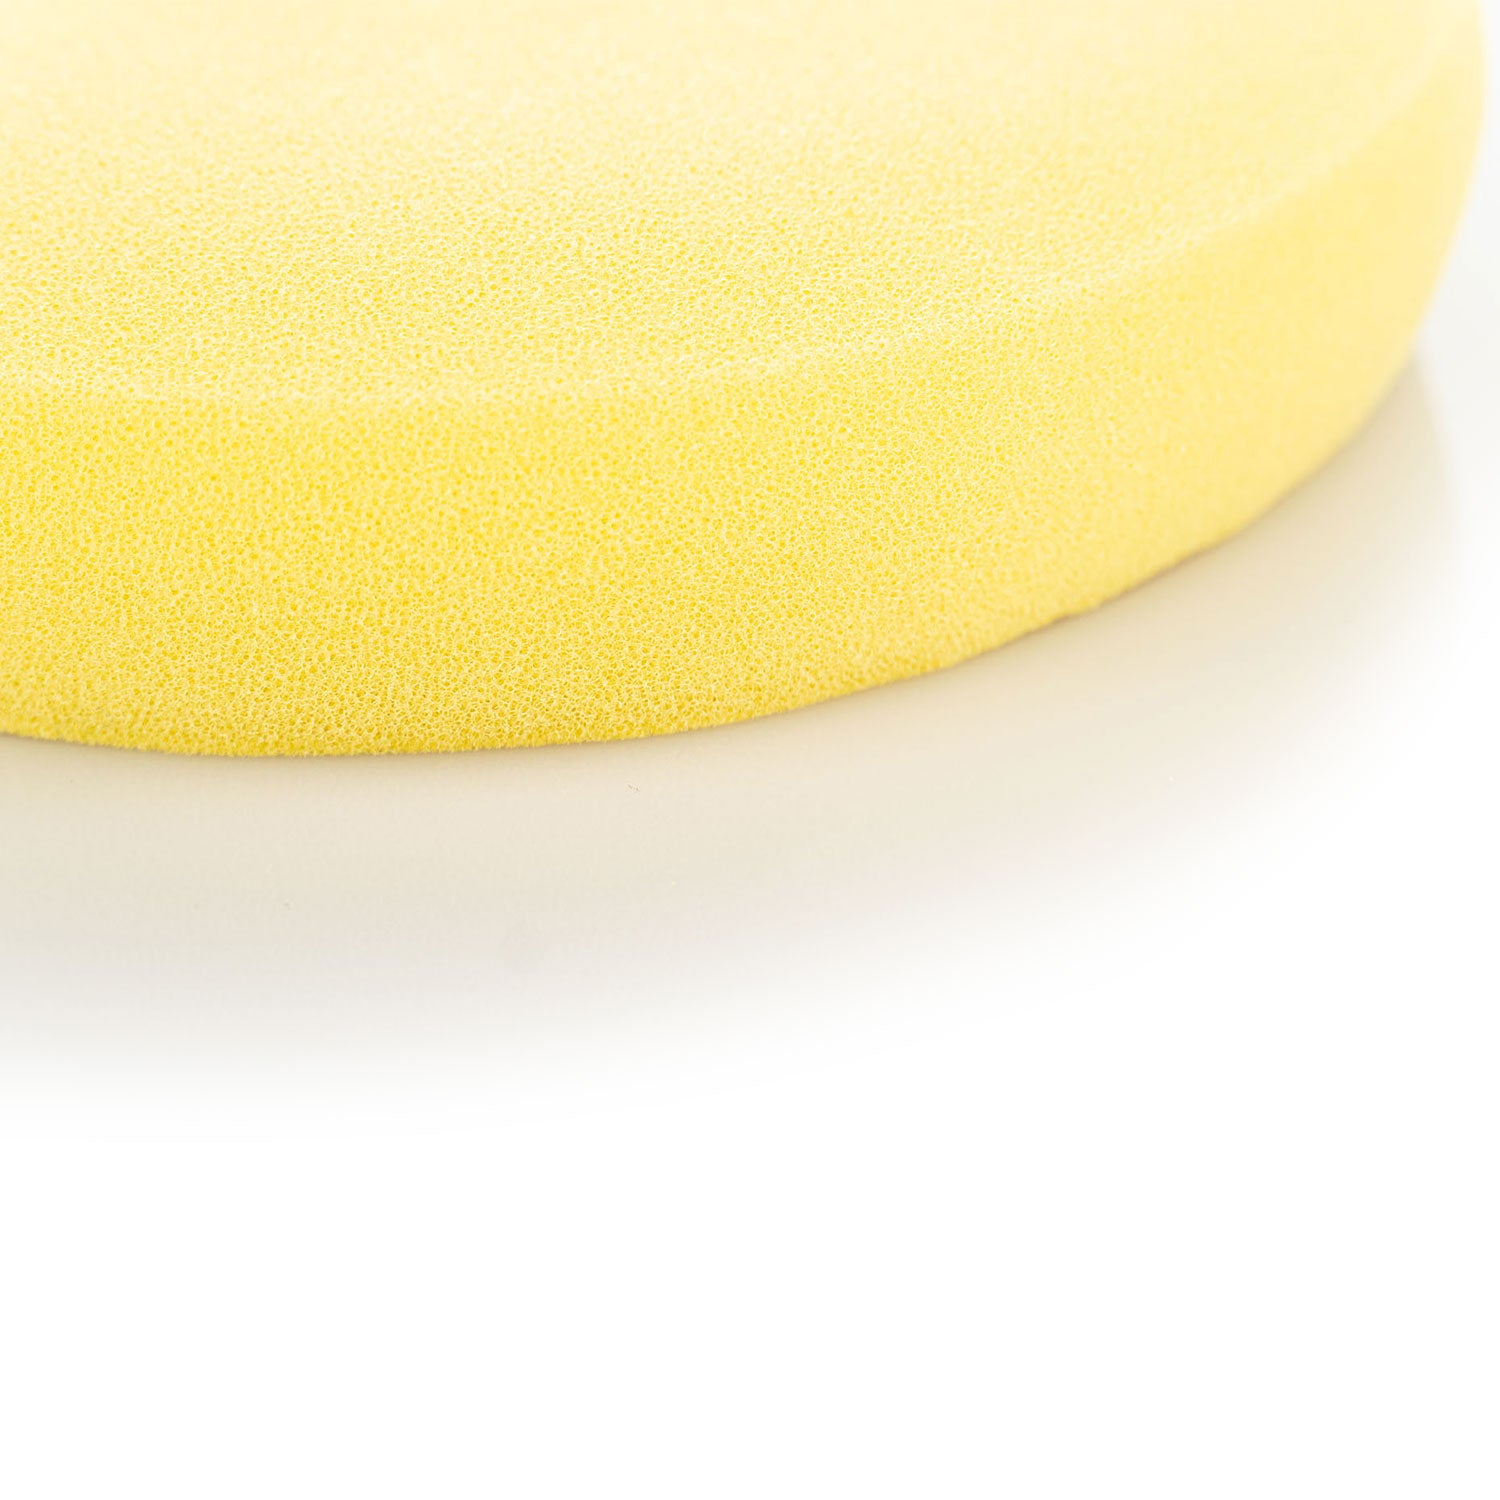 stinger-c04-yellow-dome-foam-cutting-pad-close-up